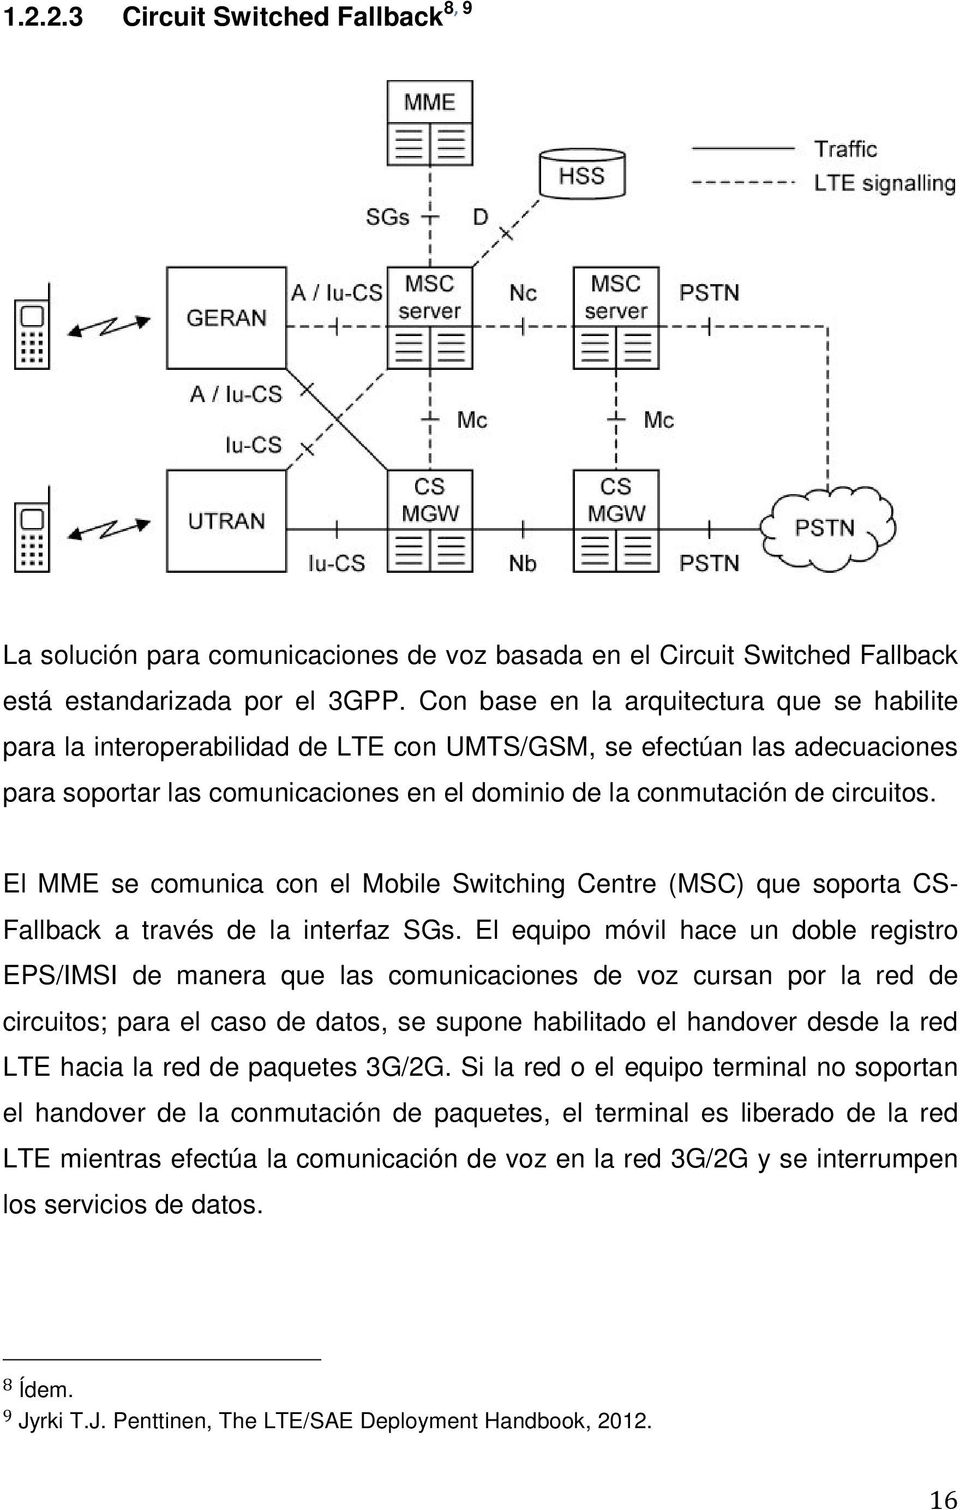 El MME se comunica con el Mobile Switching Centre (MSC) que soporta CS- Fallback a través de la interfaz SGs.